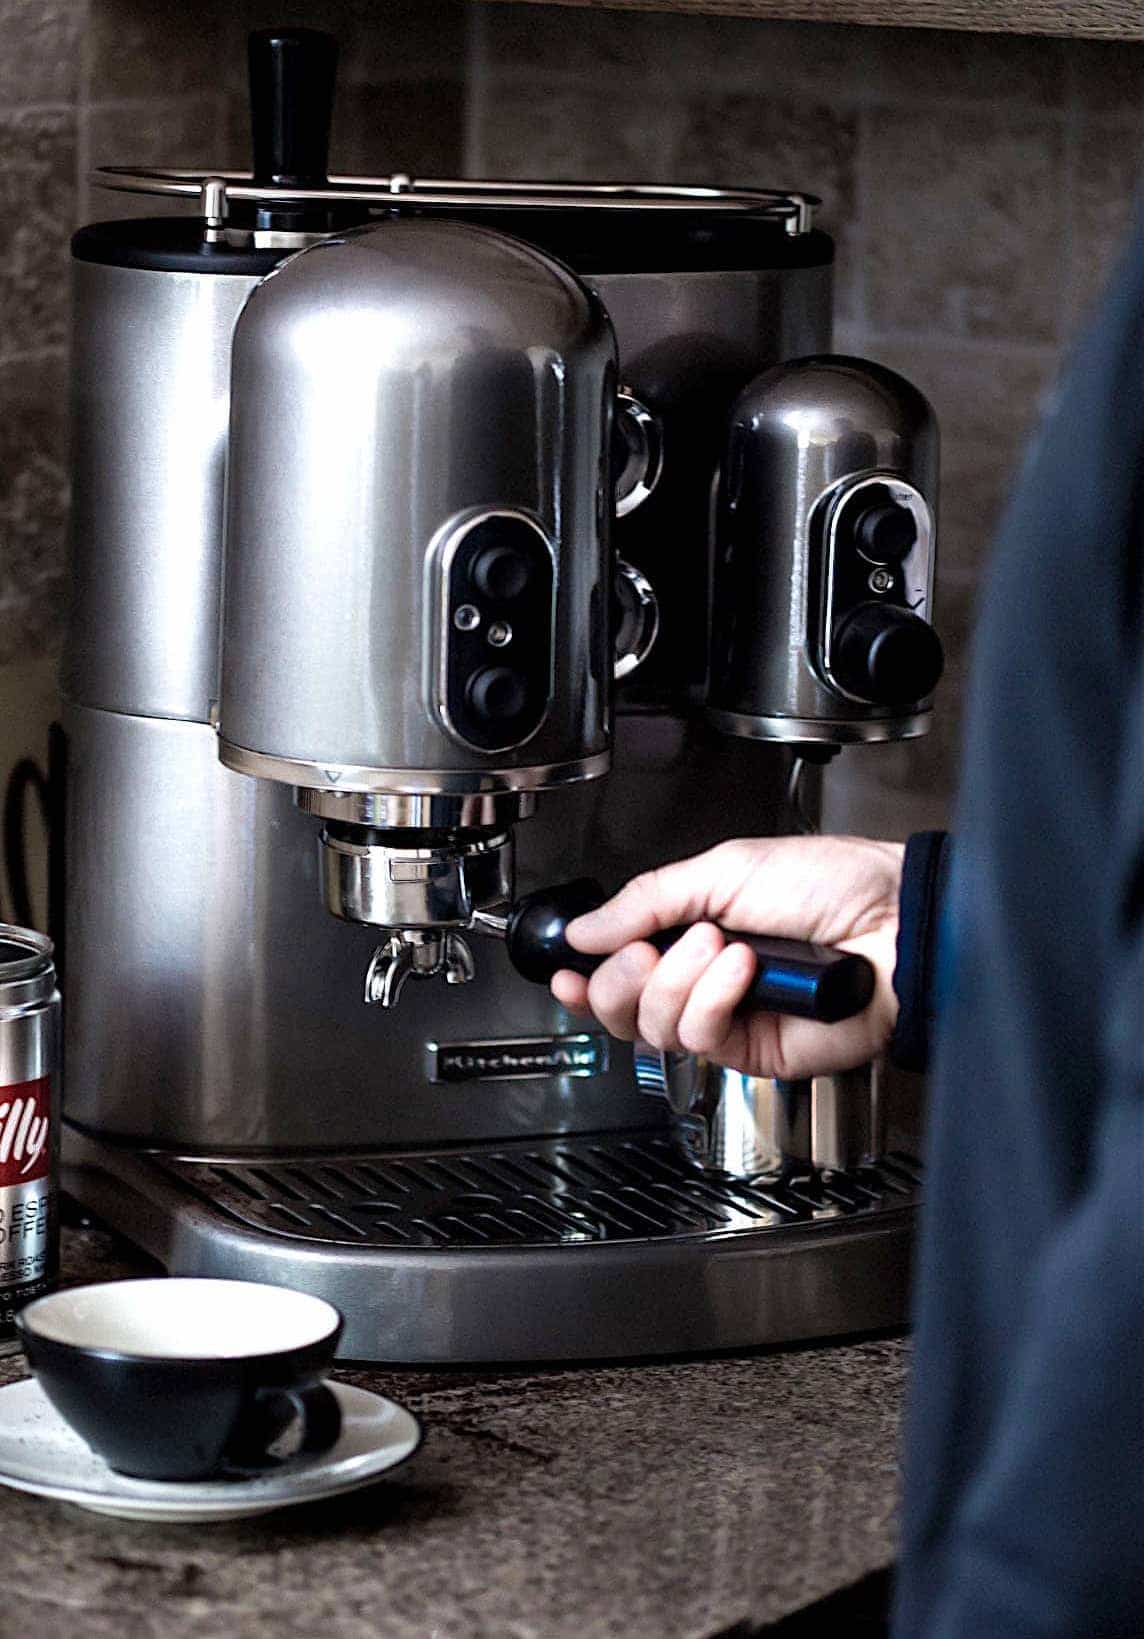 Espresso machine pulling espresso shots